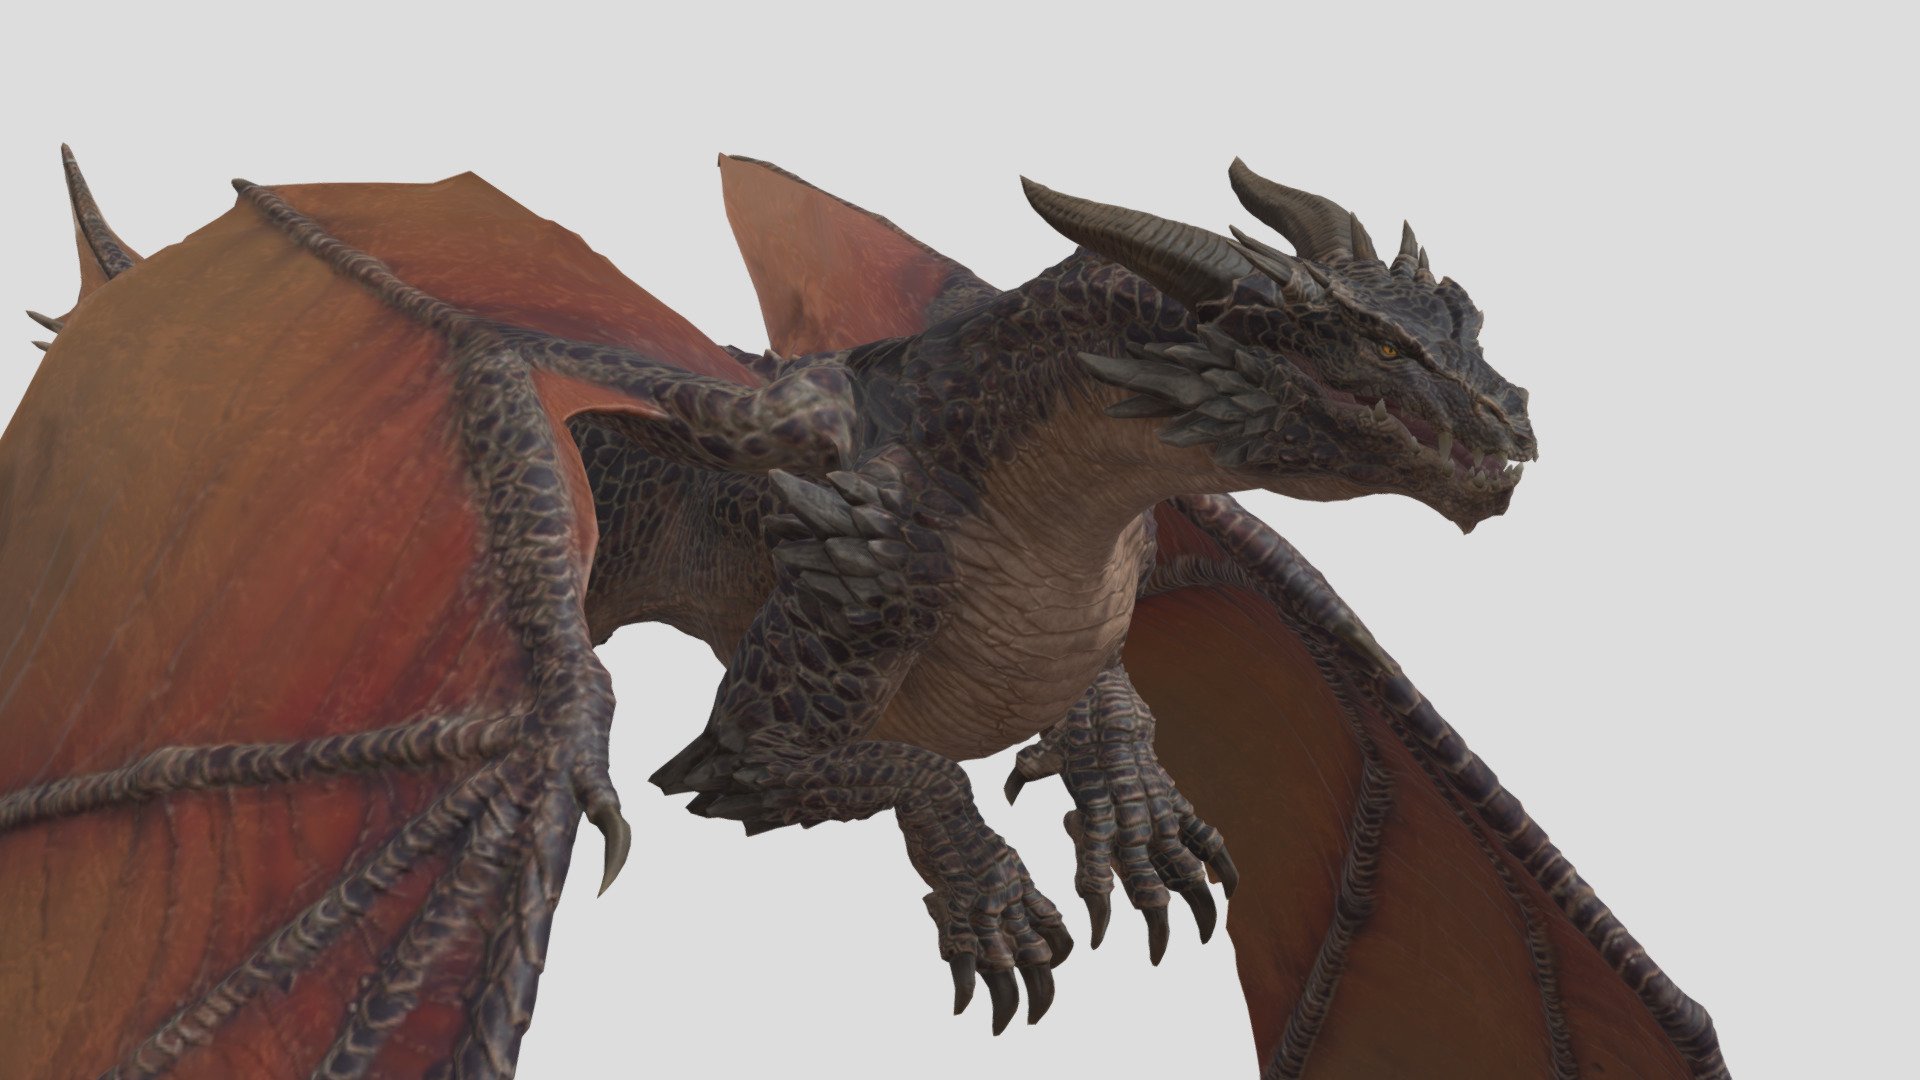 Dragon Flying Animated model
fbx file format - Dragon Animated - 3D model by monstermod 3d model